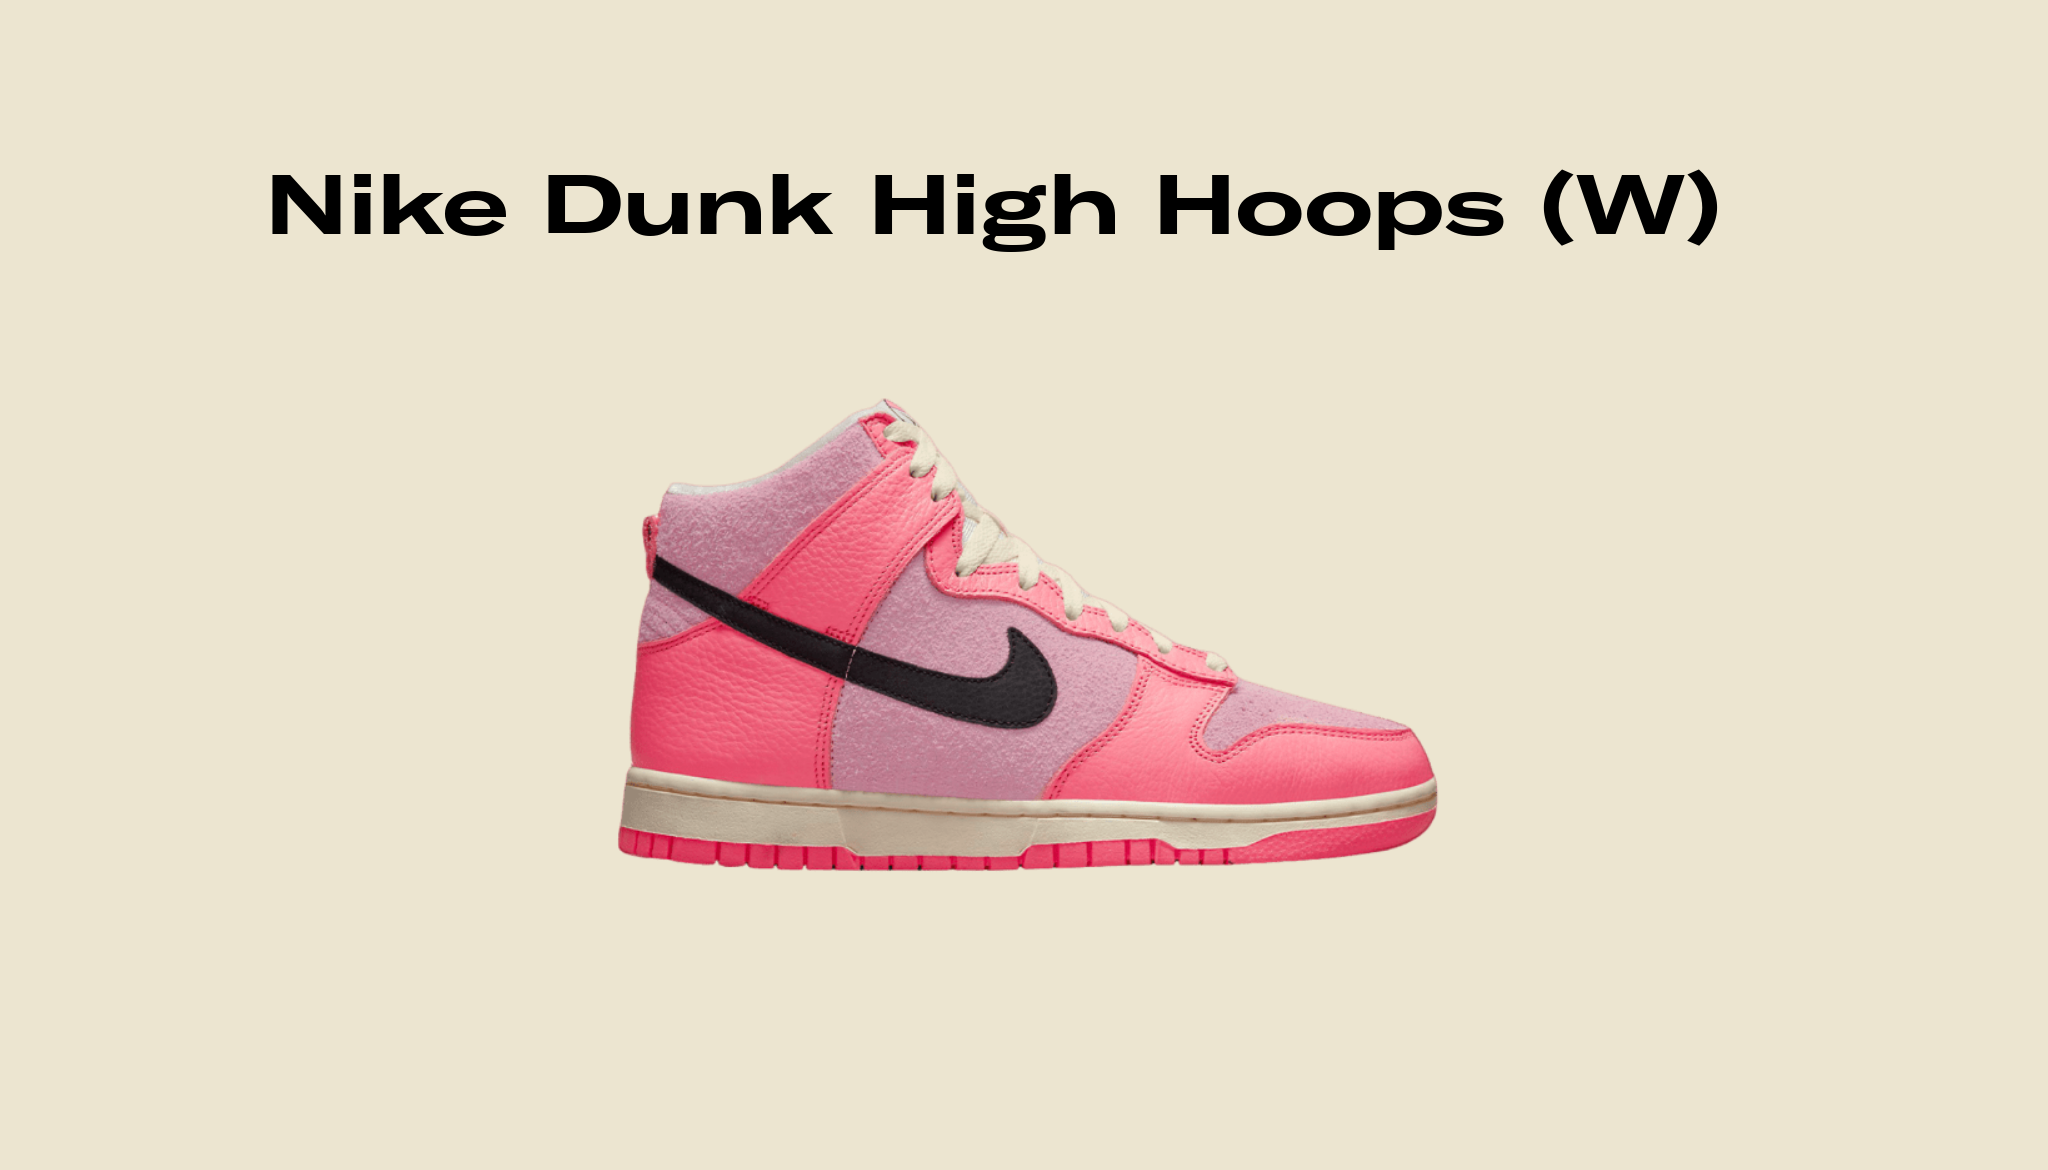 Nike Dunk High Hoops (W), Raffles and Release Date | Sole Retriever